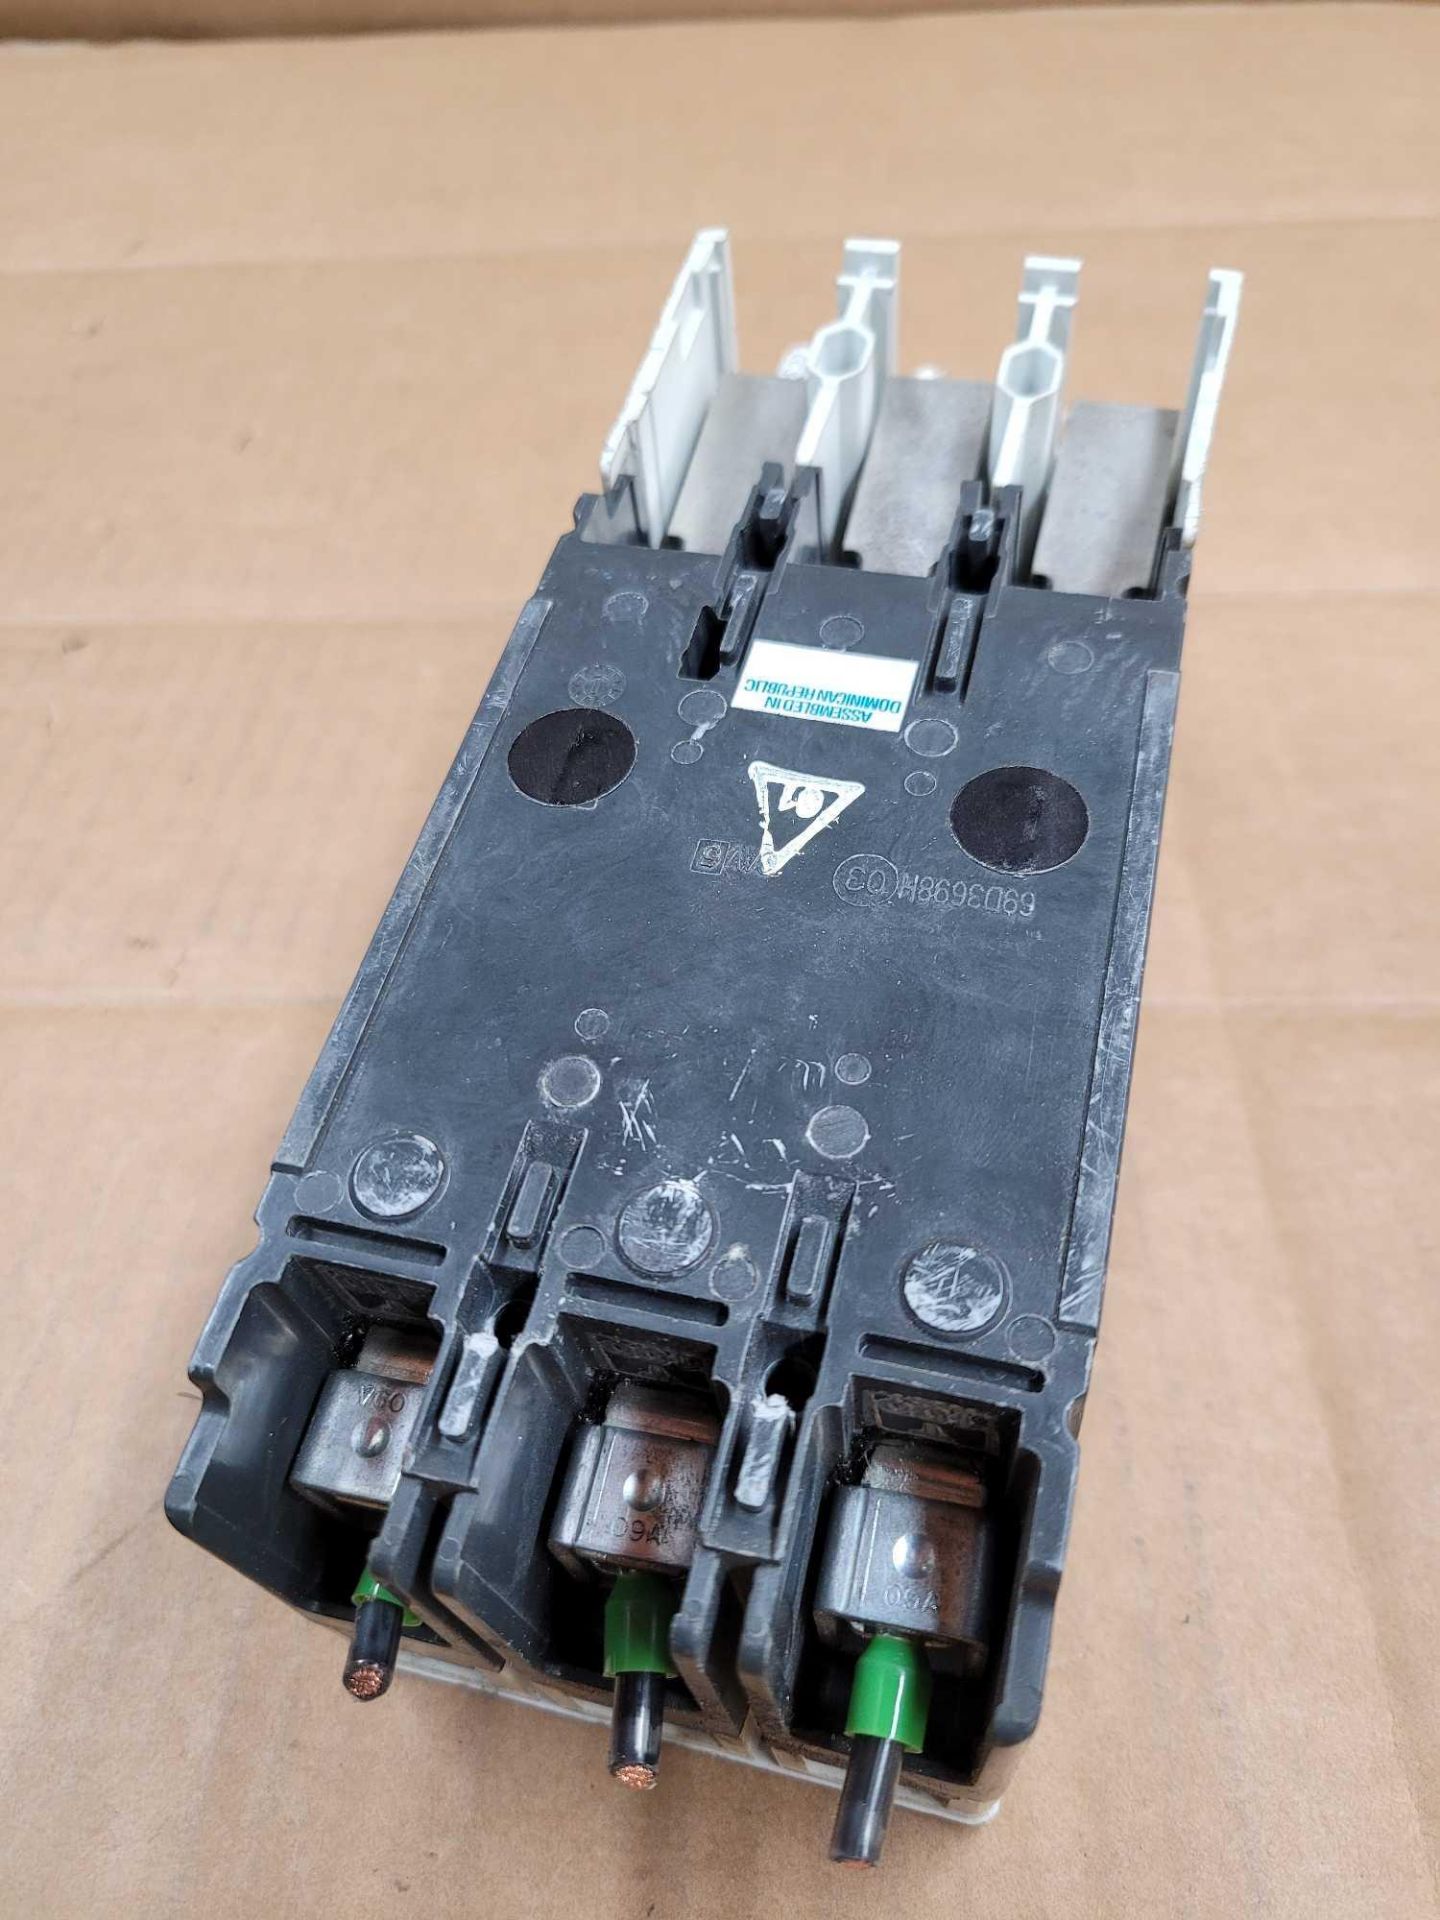 LOT OF 5 ALLEN BRADLEY 140U-H6C3-C30B / 30 Amp Molded Case Circuit Breaker  /  Lot Weight: 13.2 lbs - Image 5 of 7